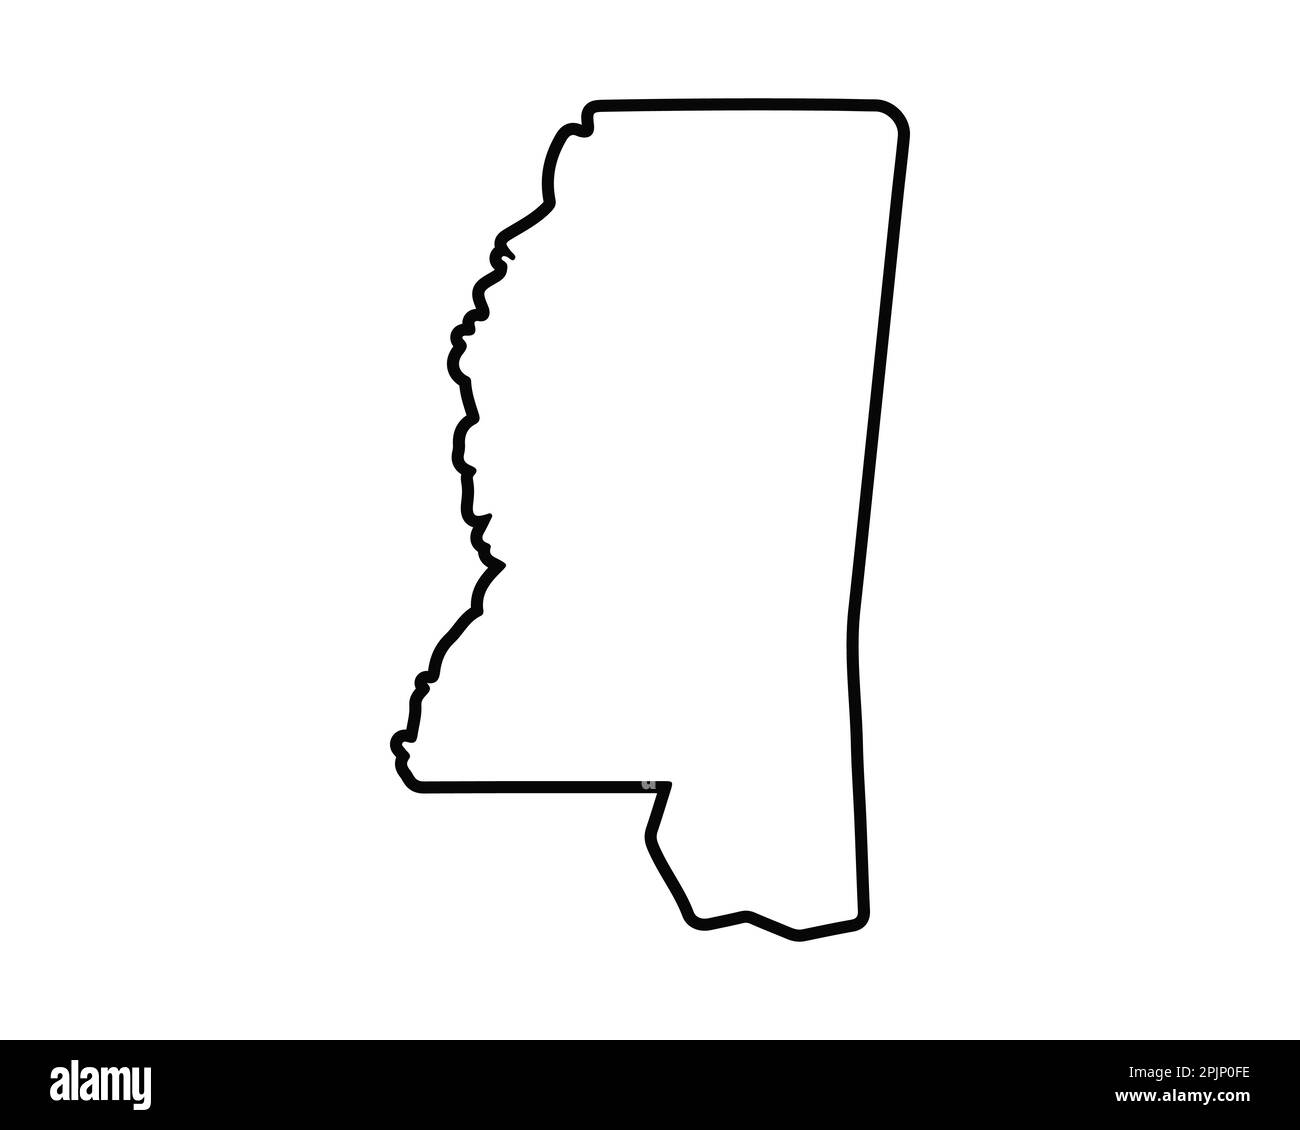 Mississippi state map. US state map. Mississippi outline symbol. Vector illustration Stock Vector